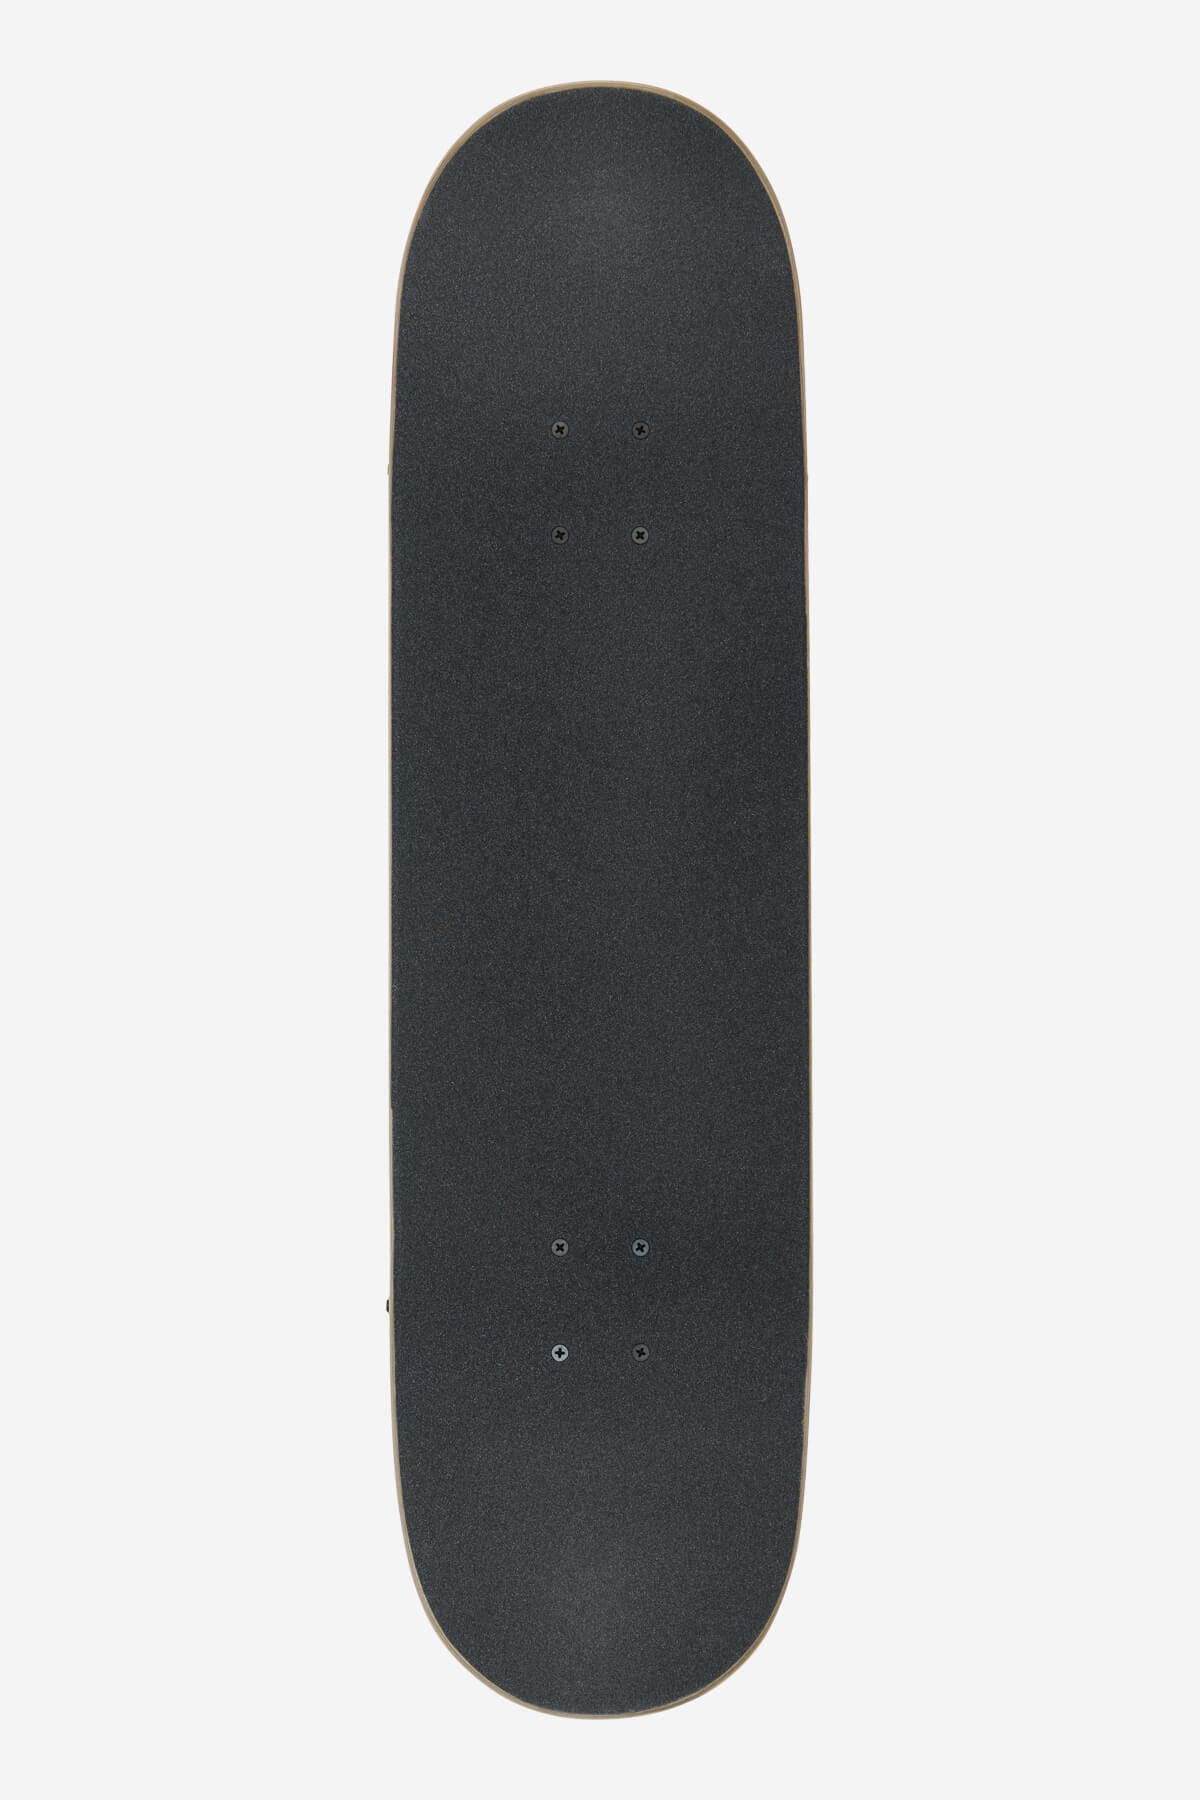 Globe - Goodstock - Robijn - 8.5" Compleet Skateboard